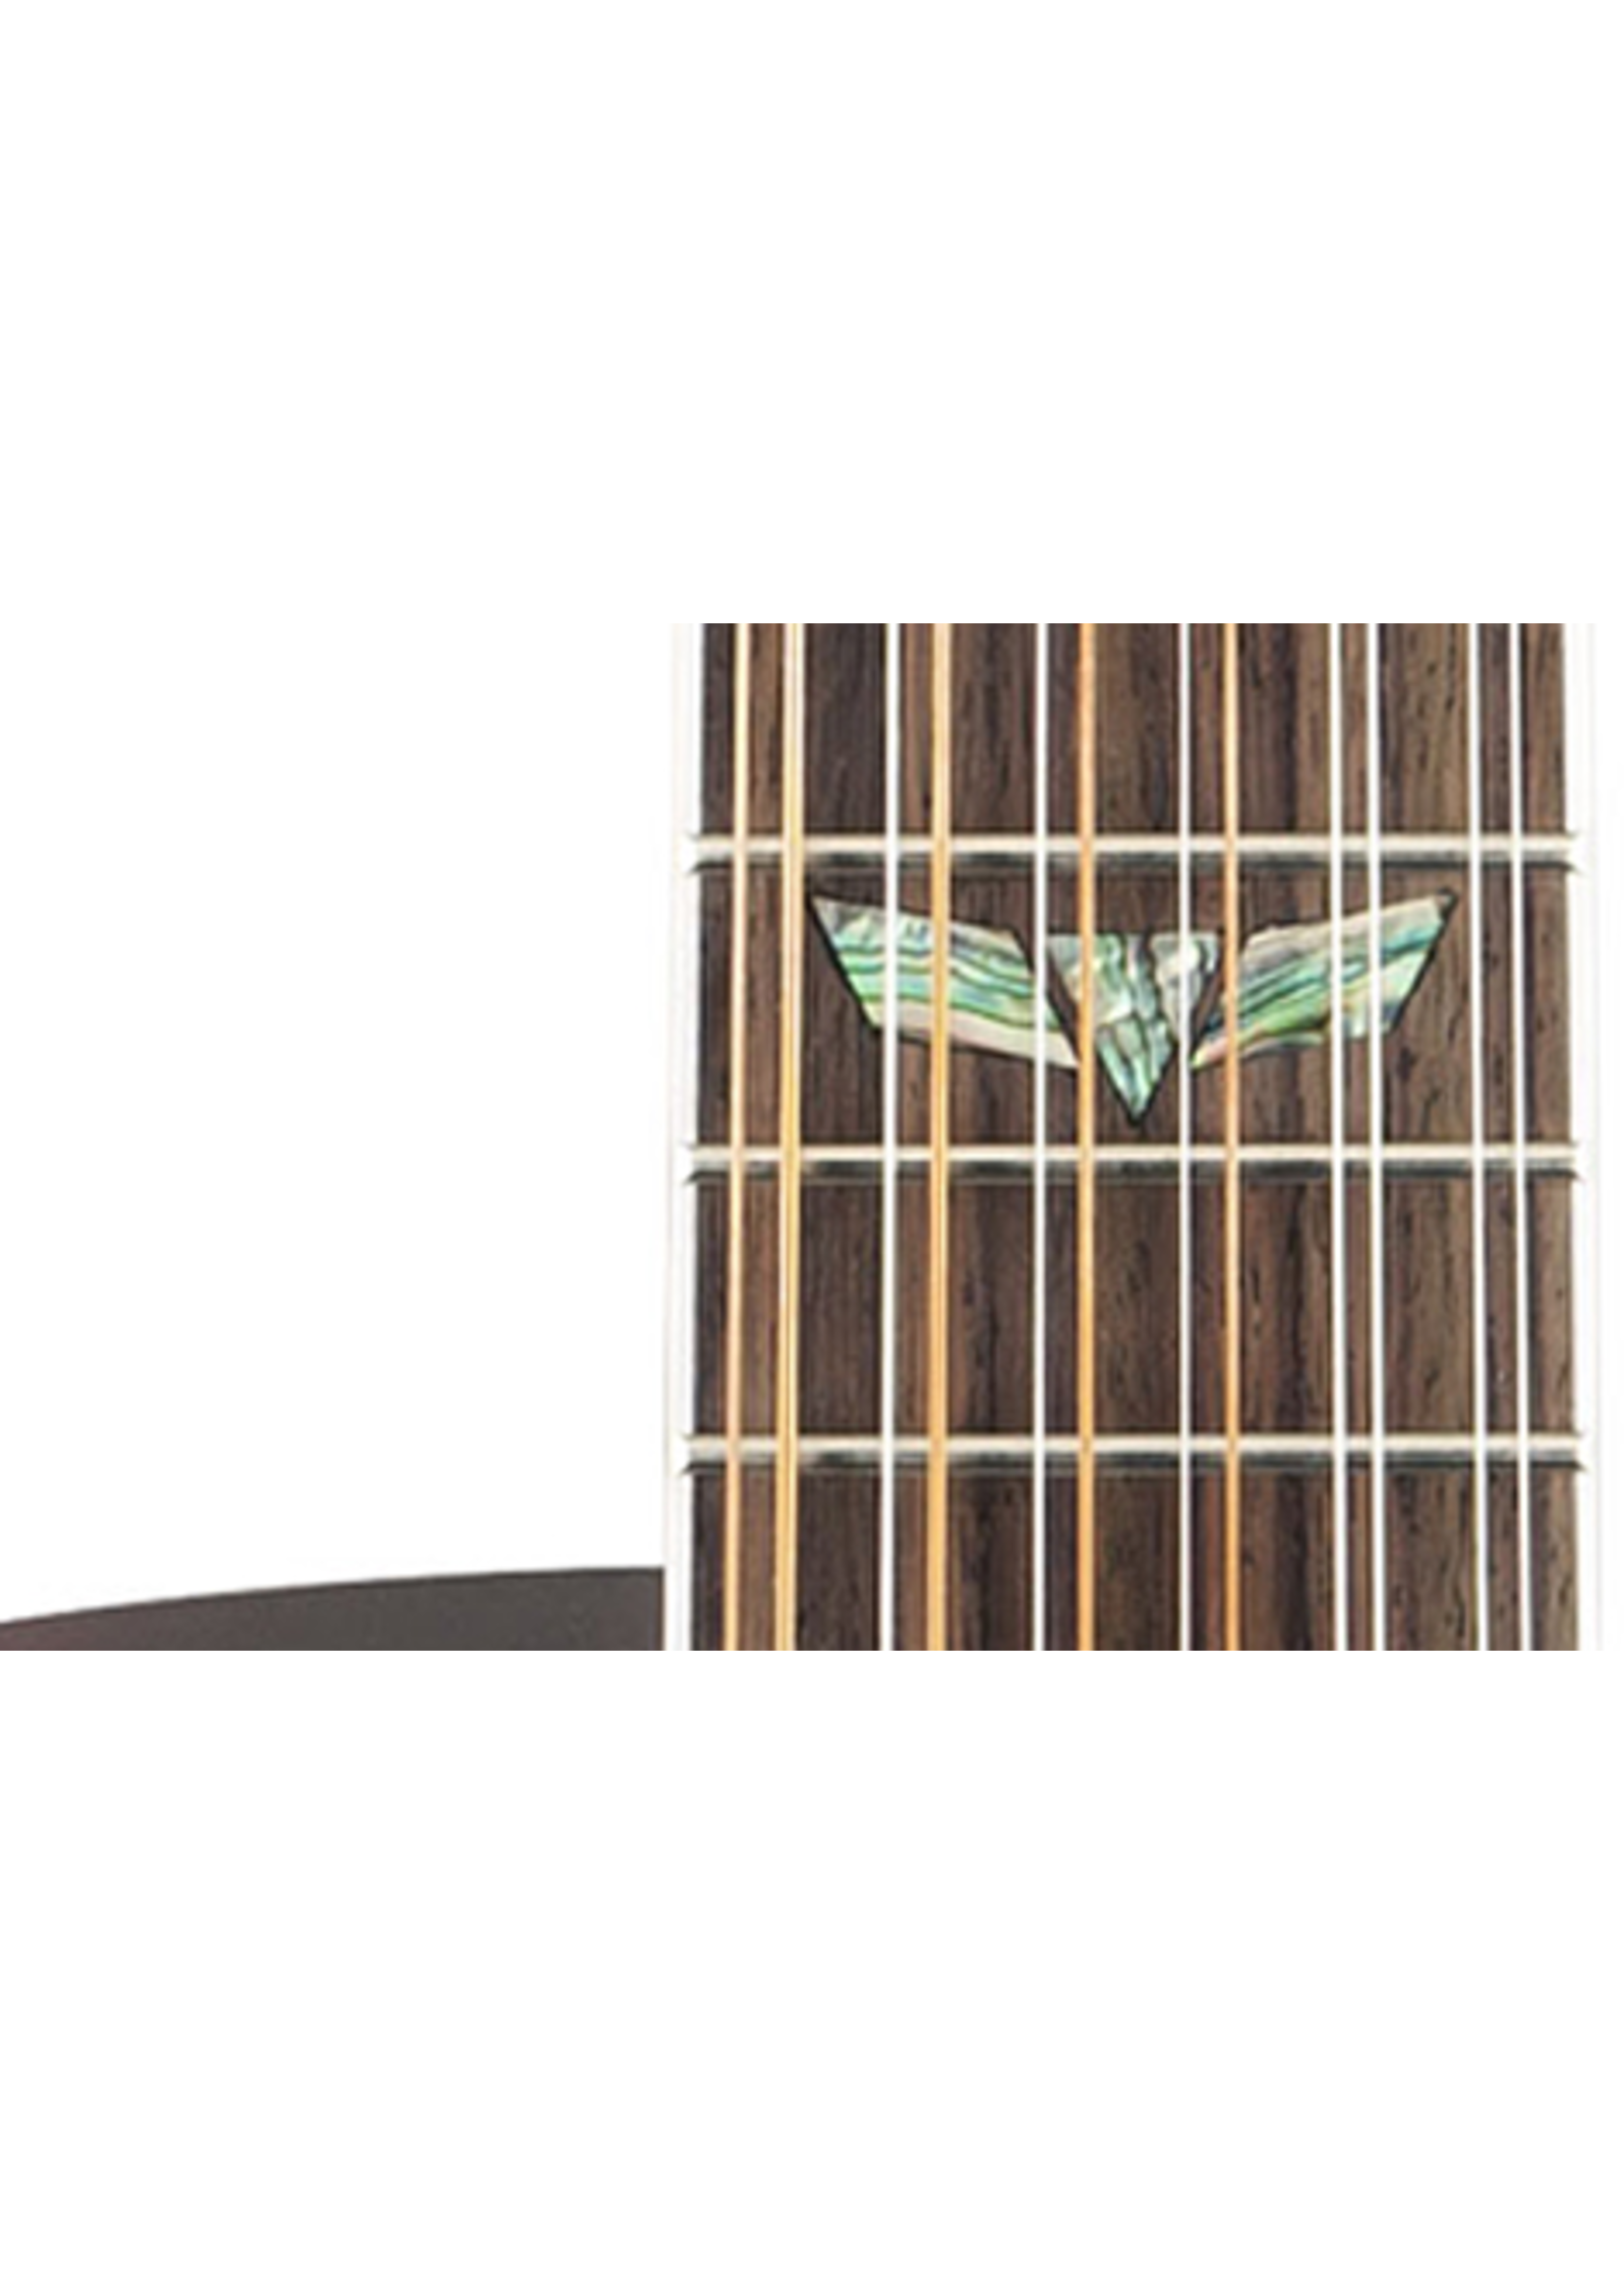 Takamine Takamine Acoustic Guitar Jumbo GJ72CE